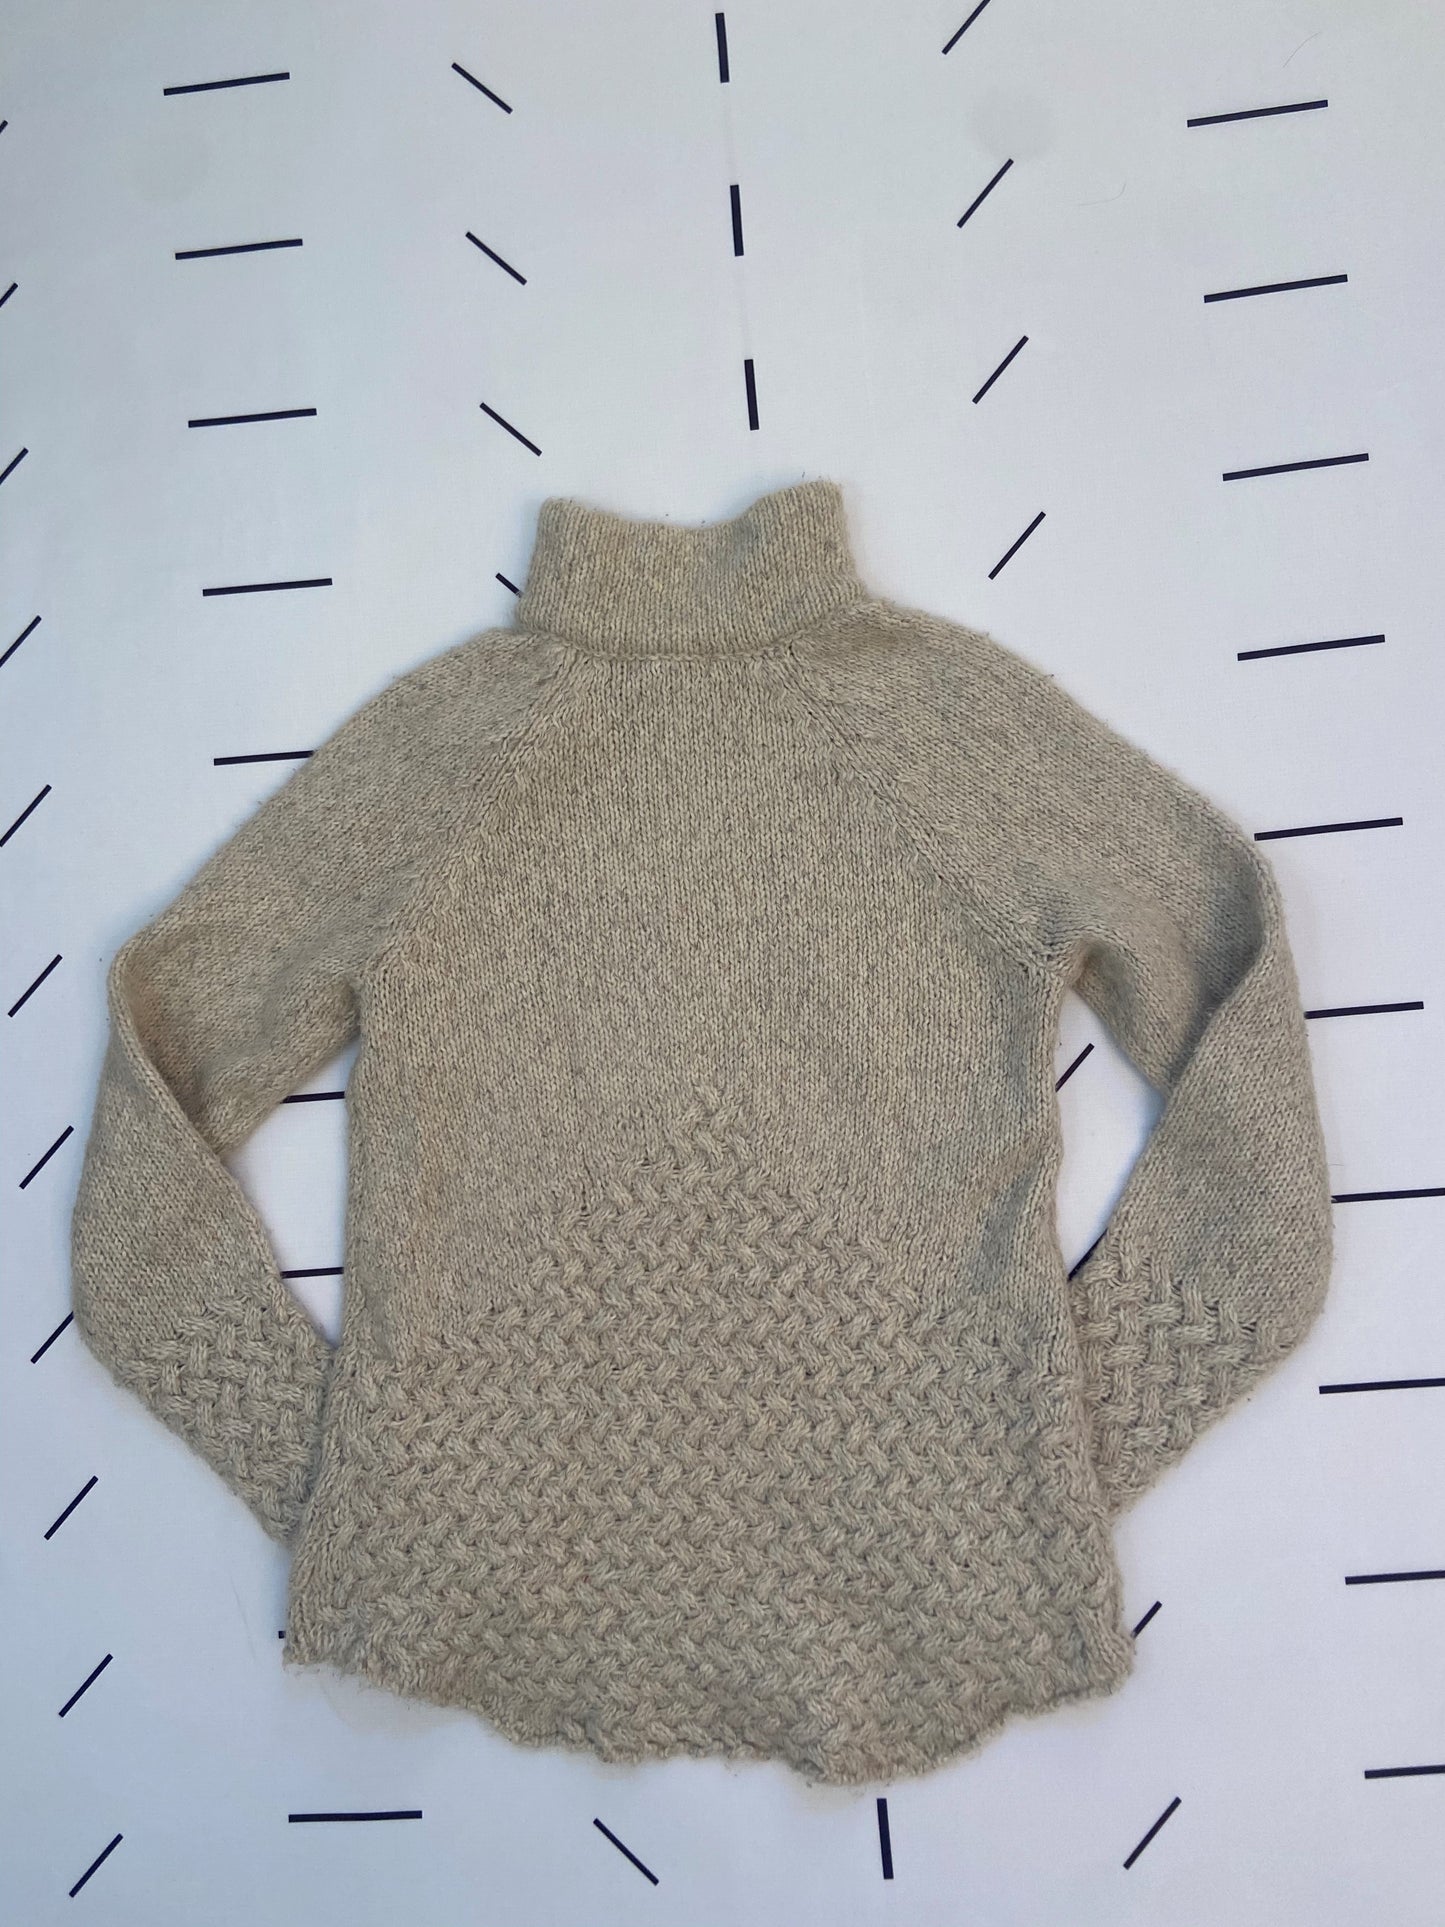 Cream Knit Neck Zipper Sweater - S